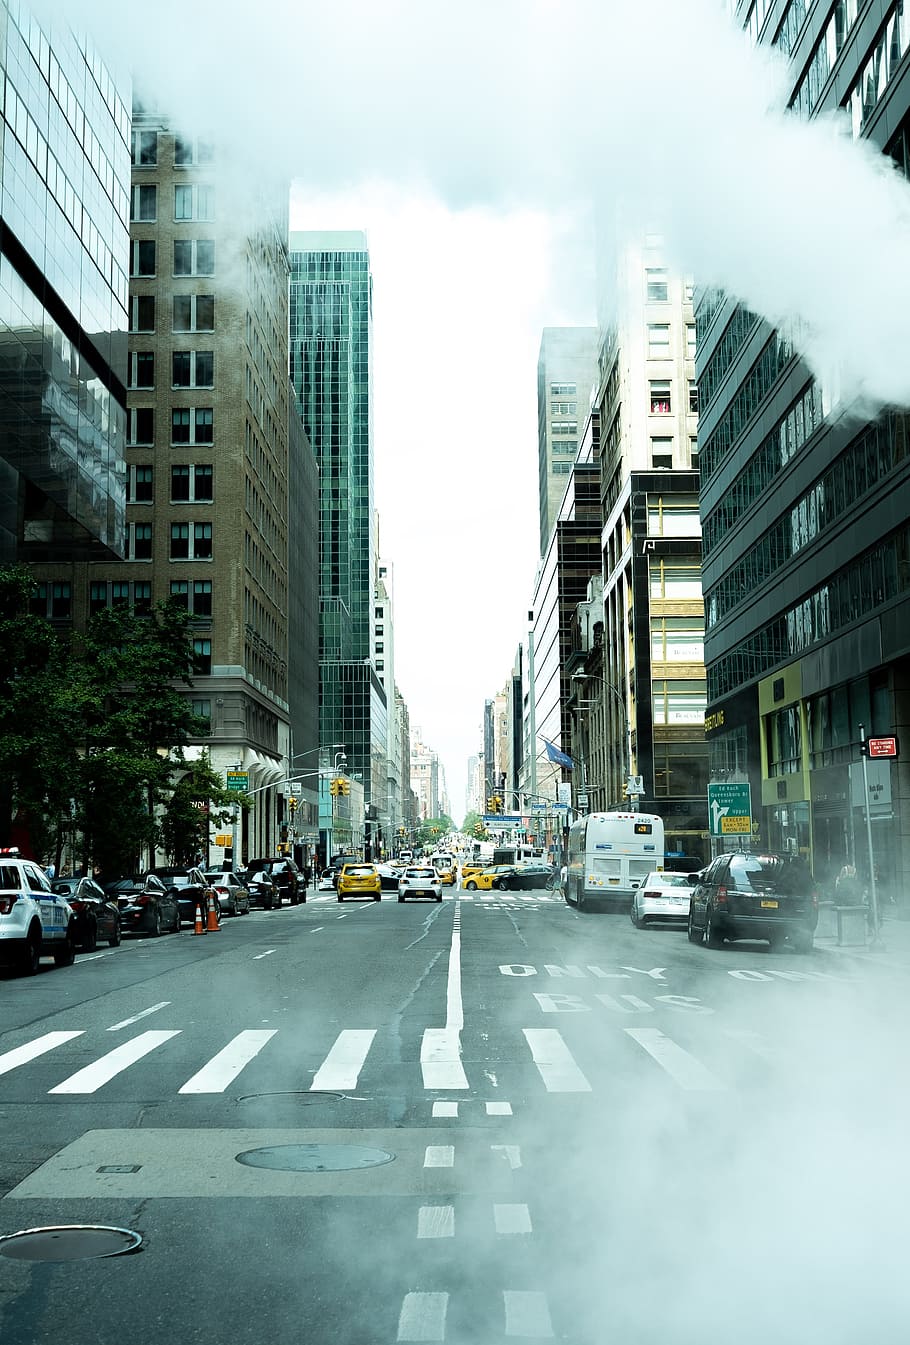 cars on asphalt road, smoke, fog, street, urban, traffic, building